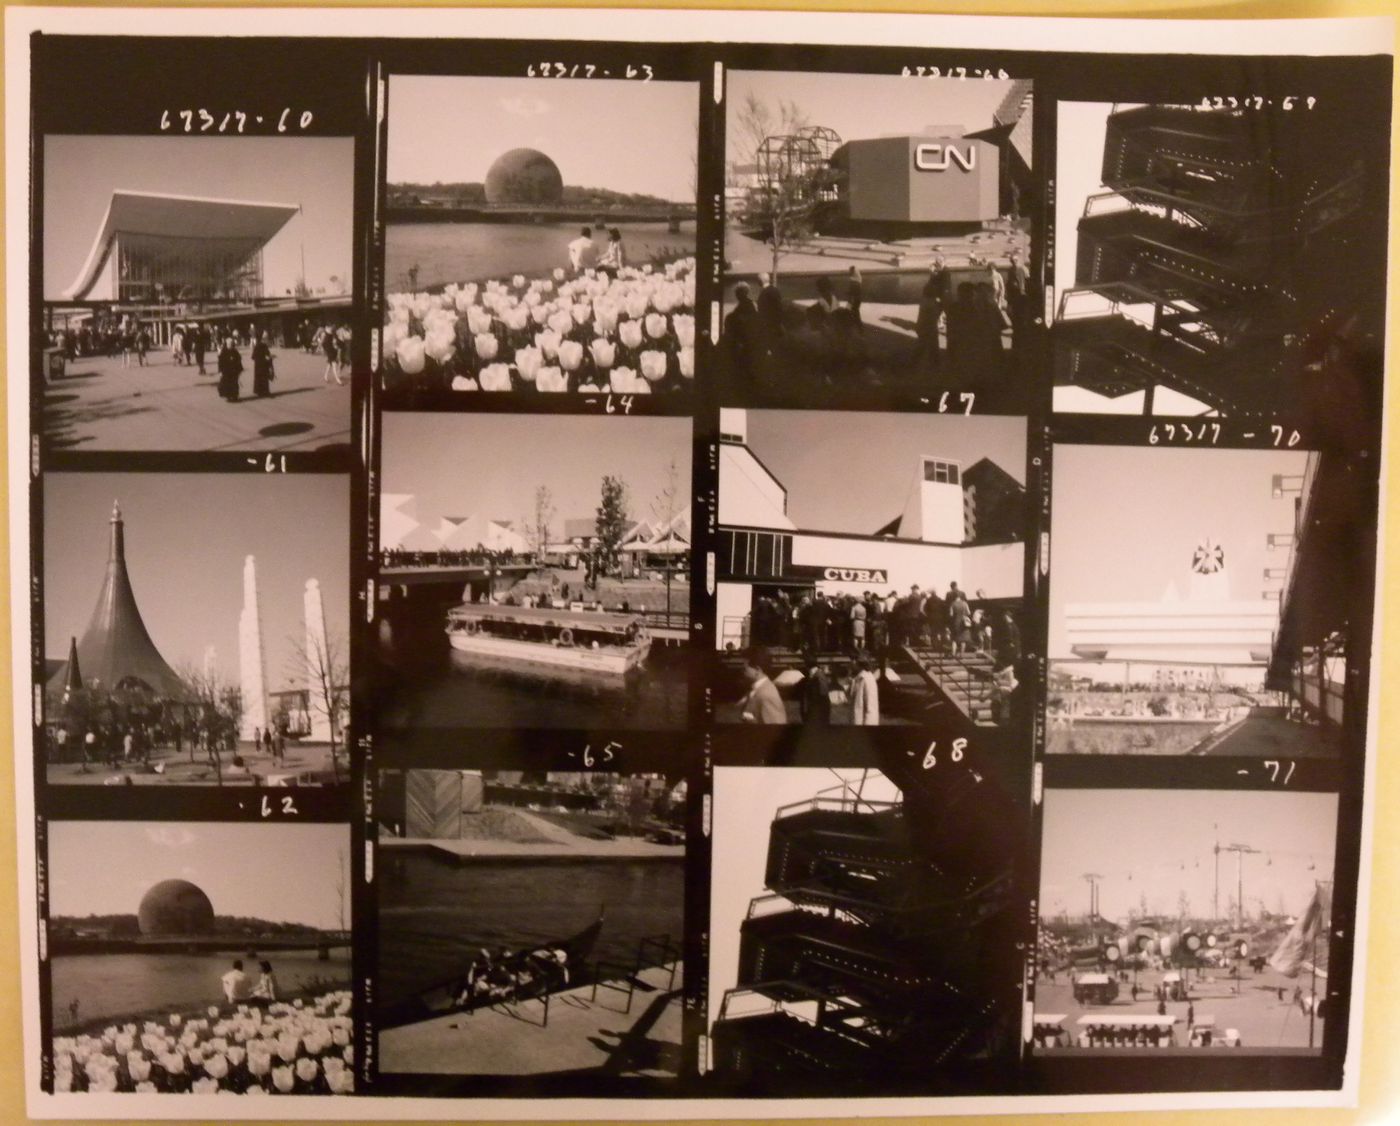 Contact sheet with photographs taken principally on the Île Notre-Dame site, Expo 67, Montréal, Québec